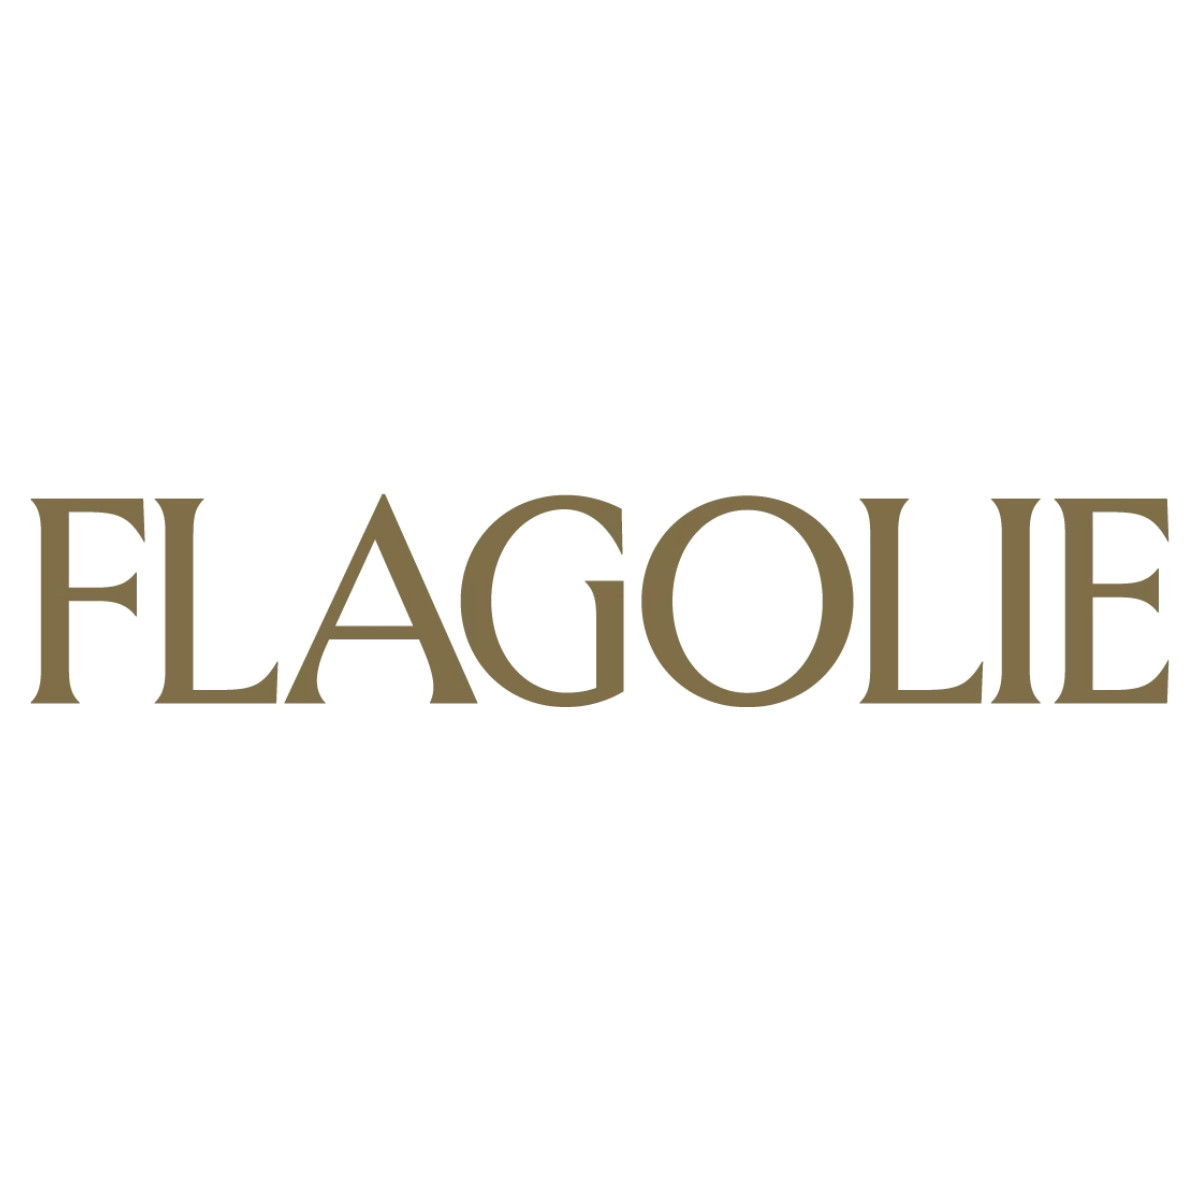 Flagolie